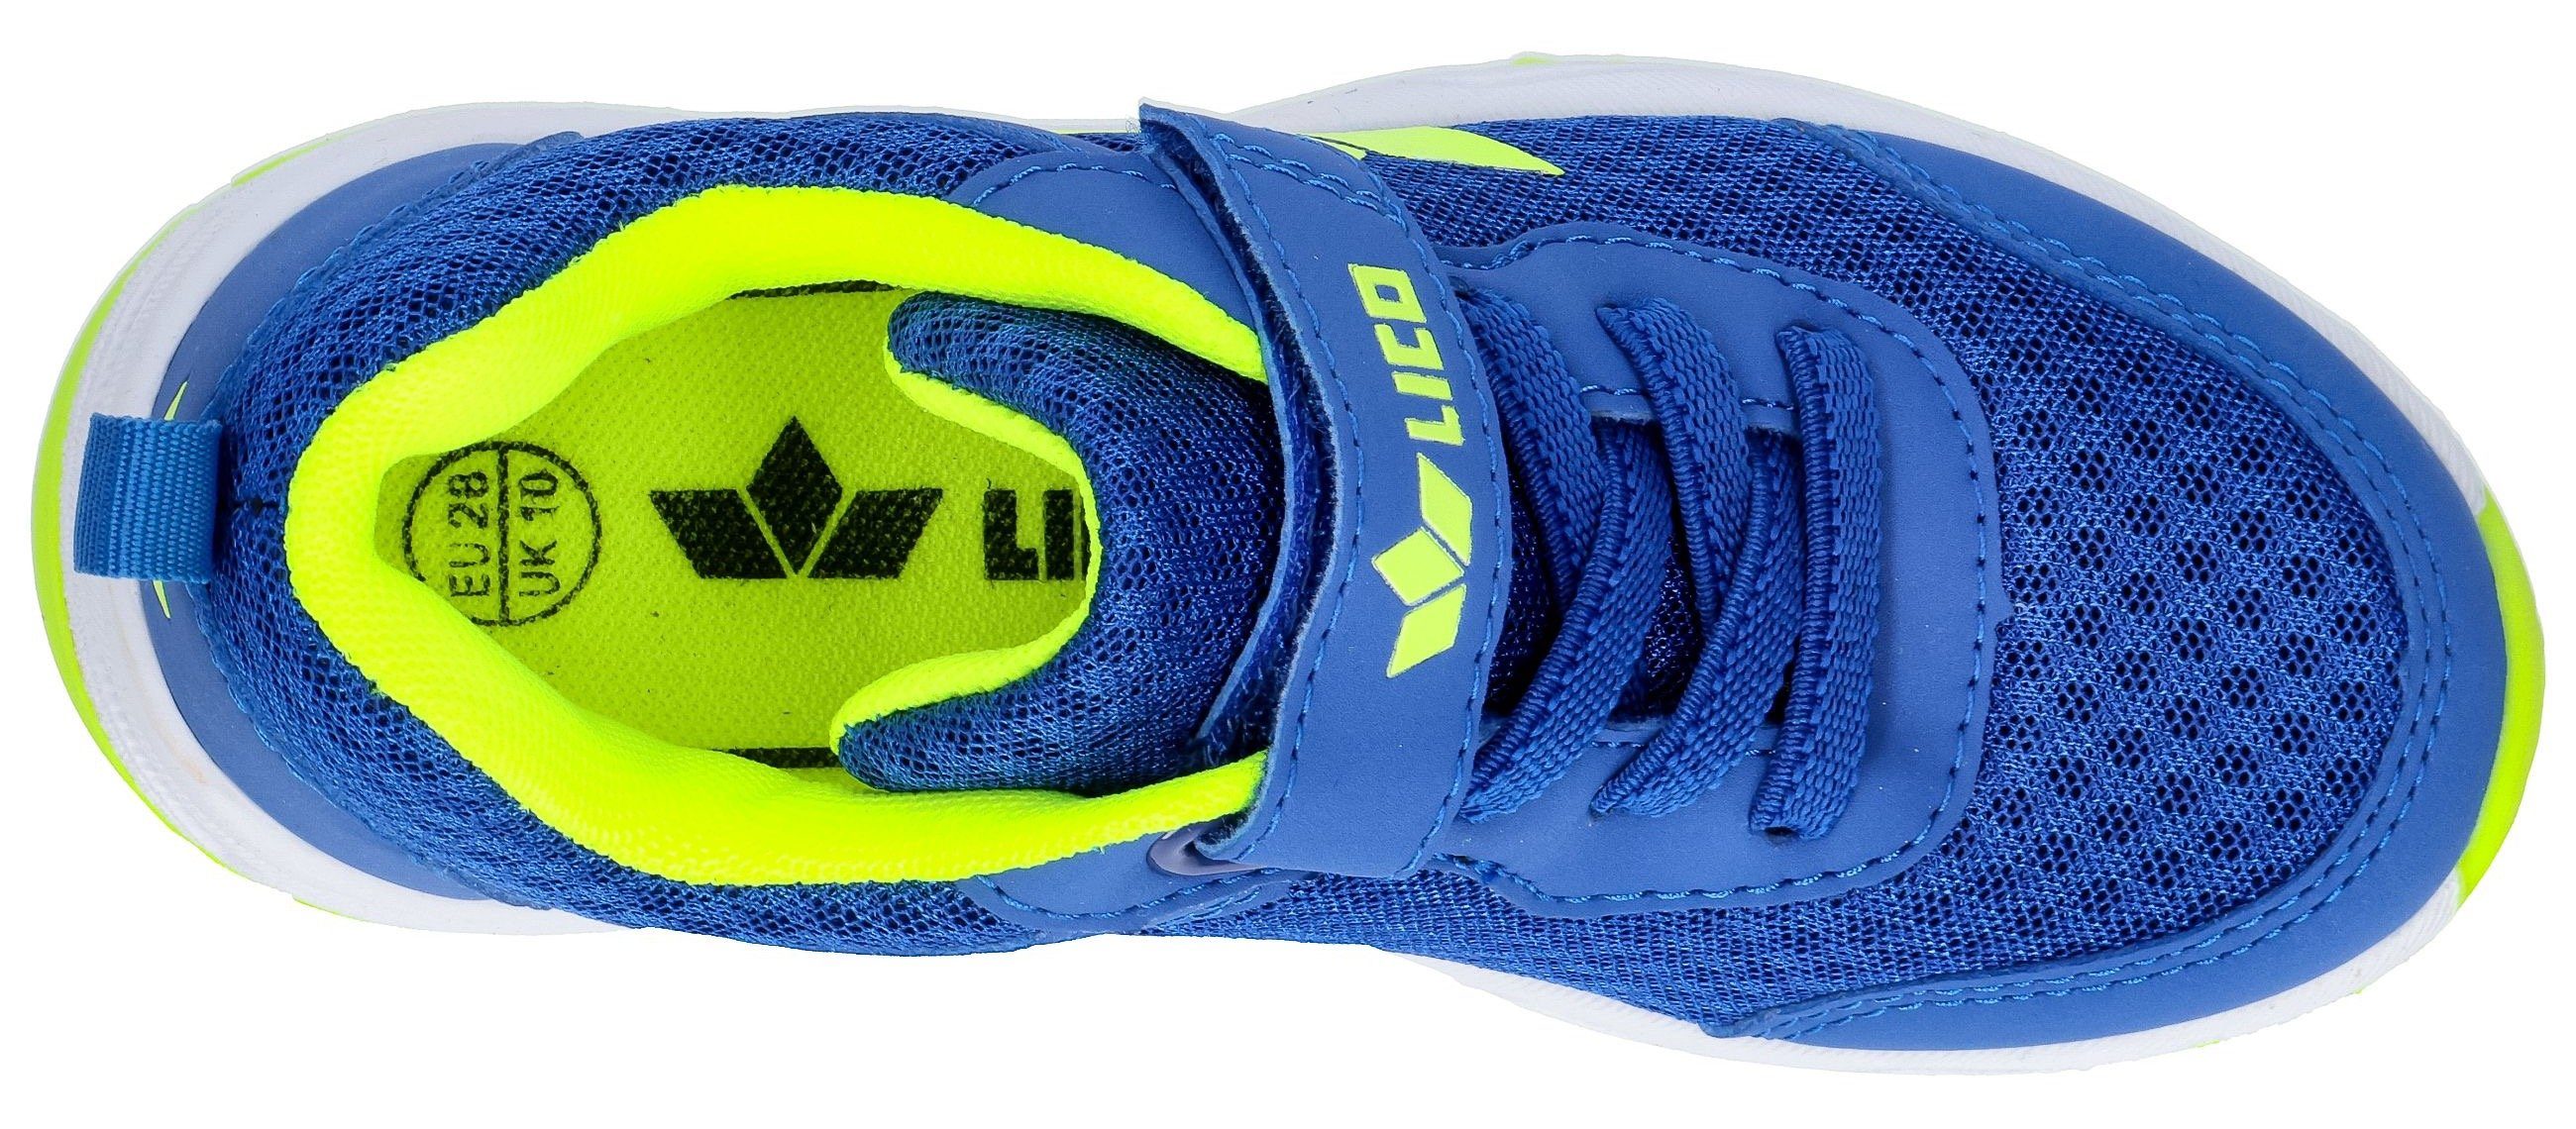 VS Wechselfußbett blau/lemon mit WMS Mika Lico Sneaker